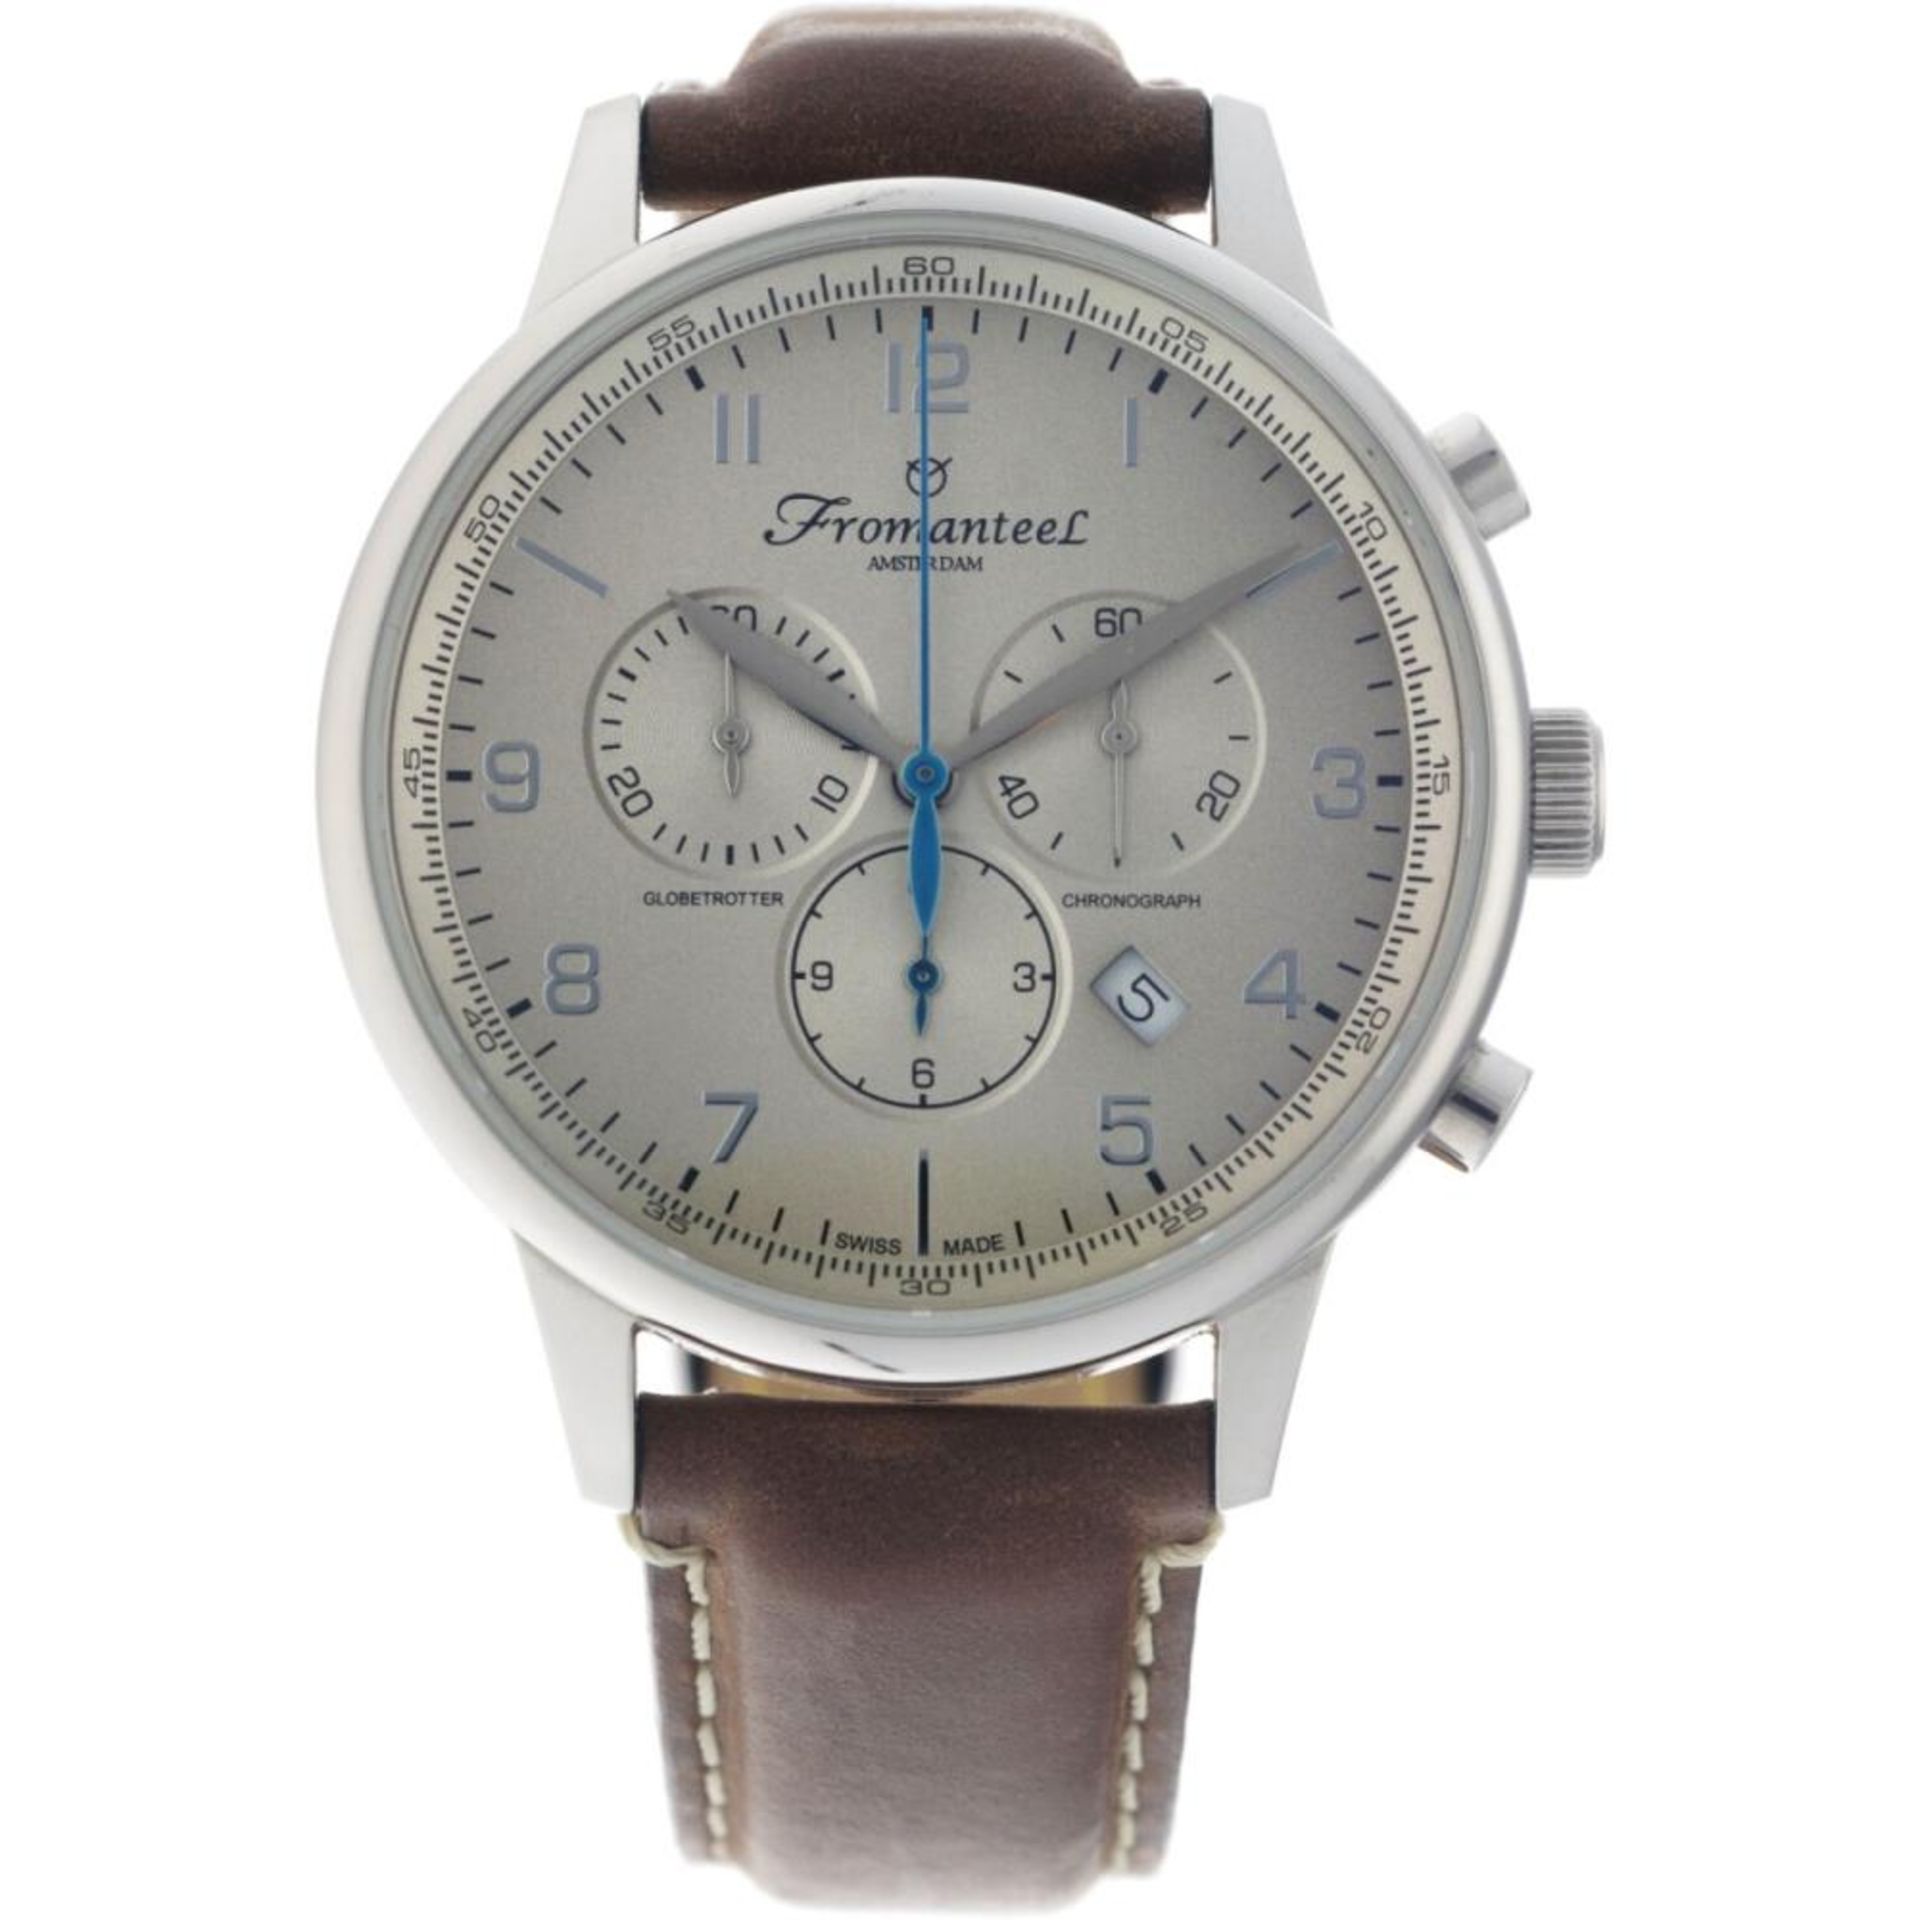 Fromanteel Amsterdam Globetrotter GT 0701 - Men's watch - approx. 2016.